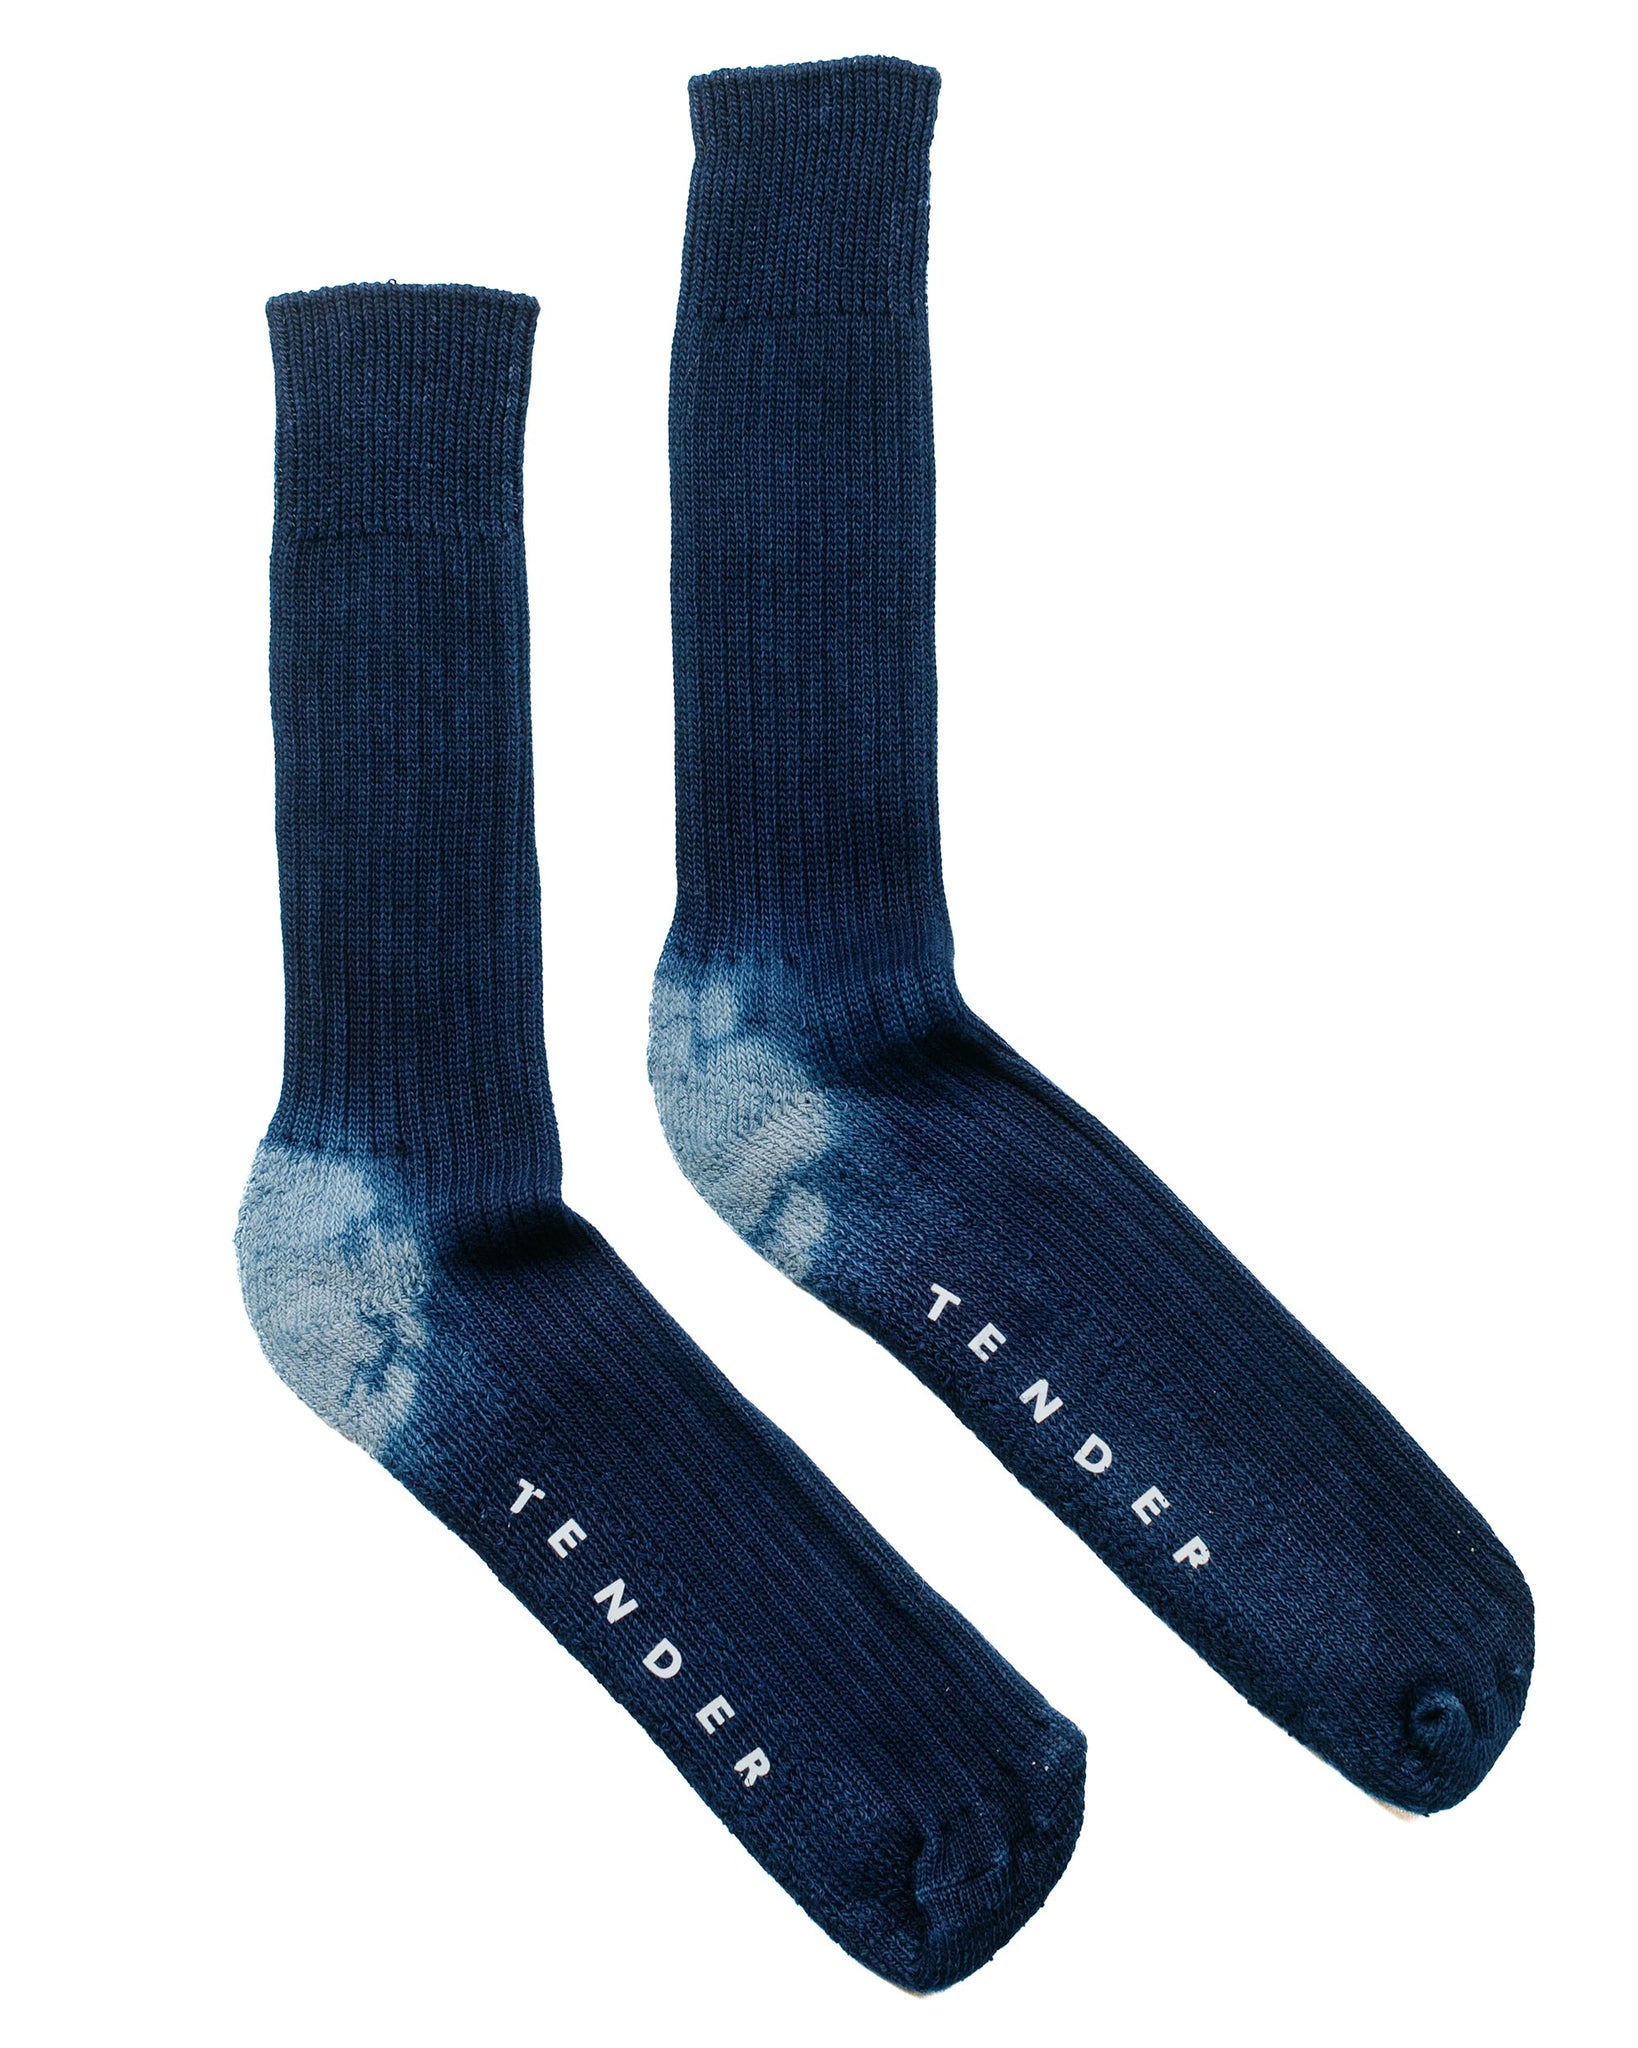 Tender Rib Calf Socks Cotton Achilles' Heel Indigo Dyed